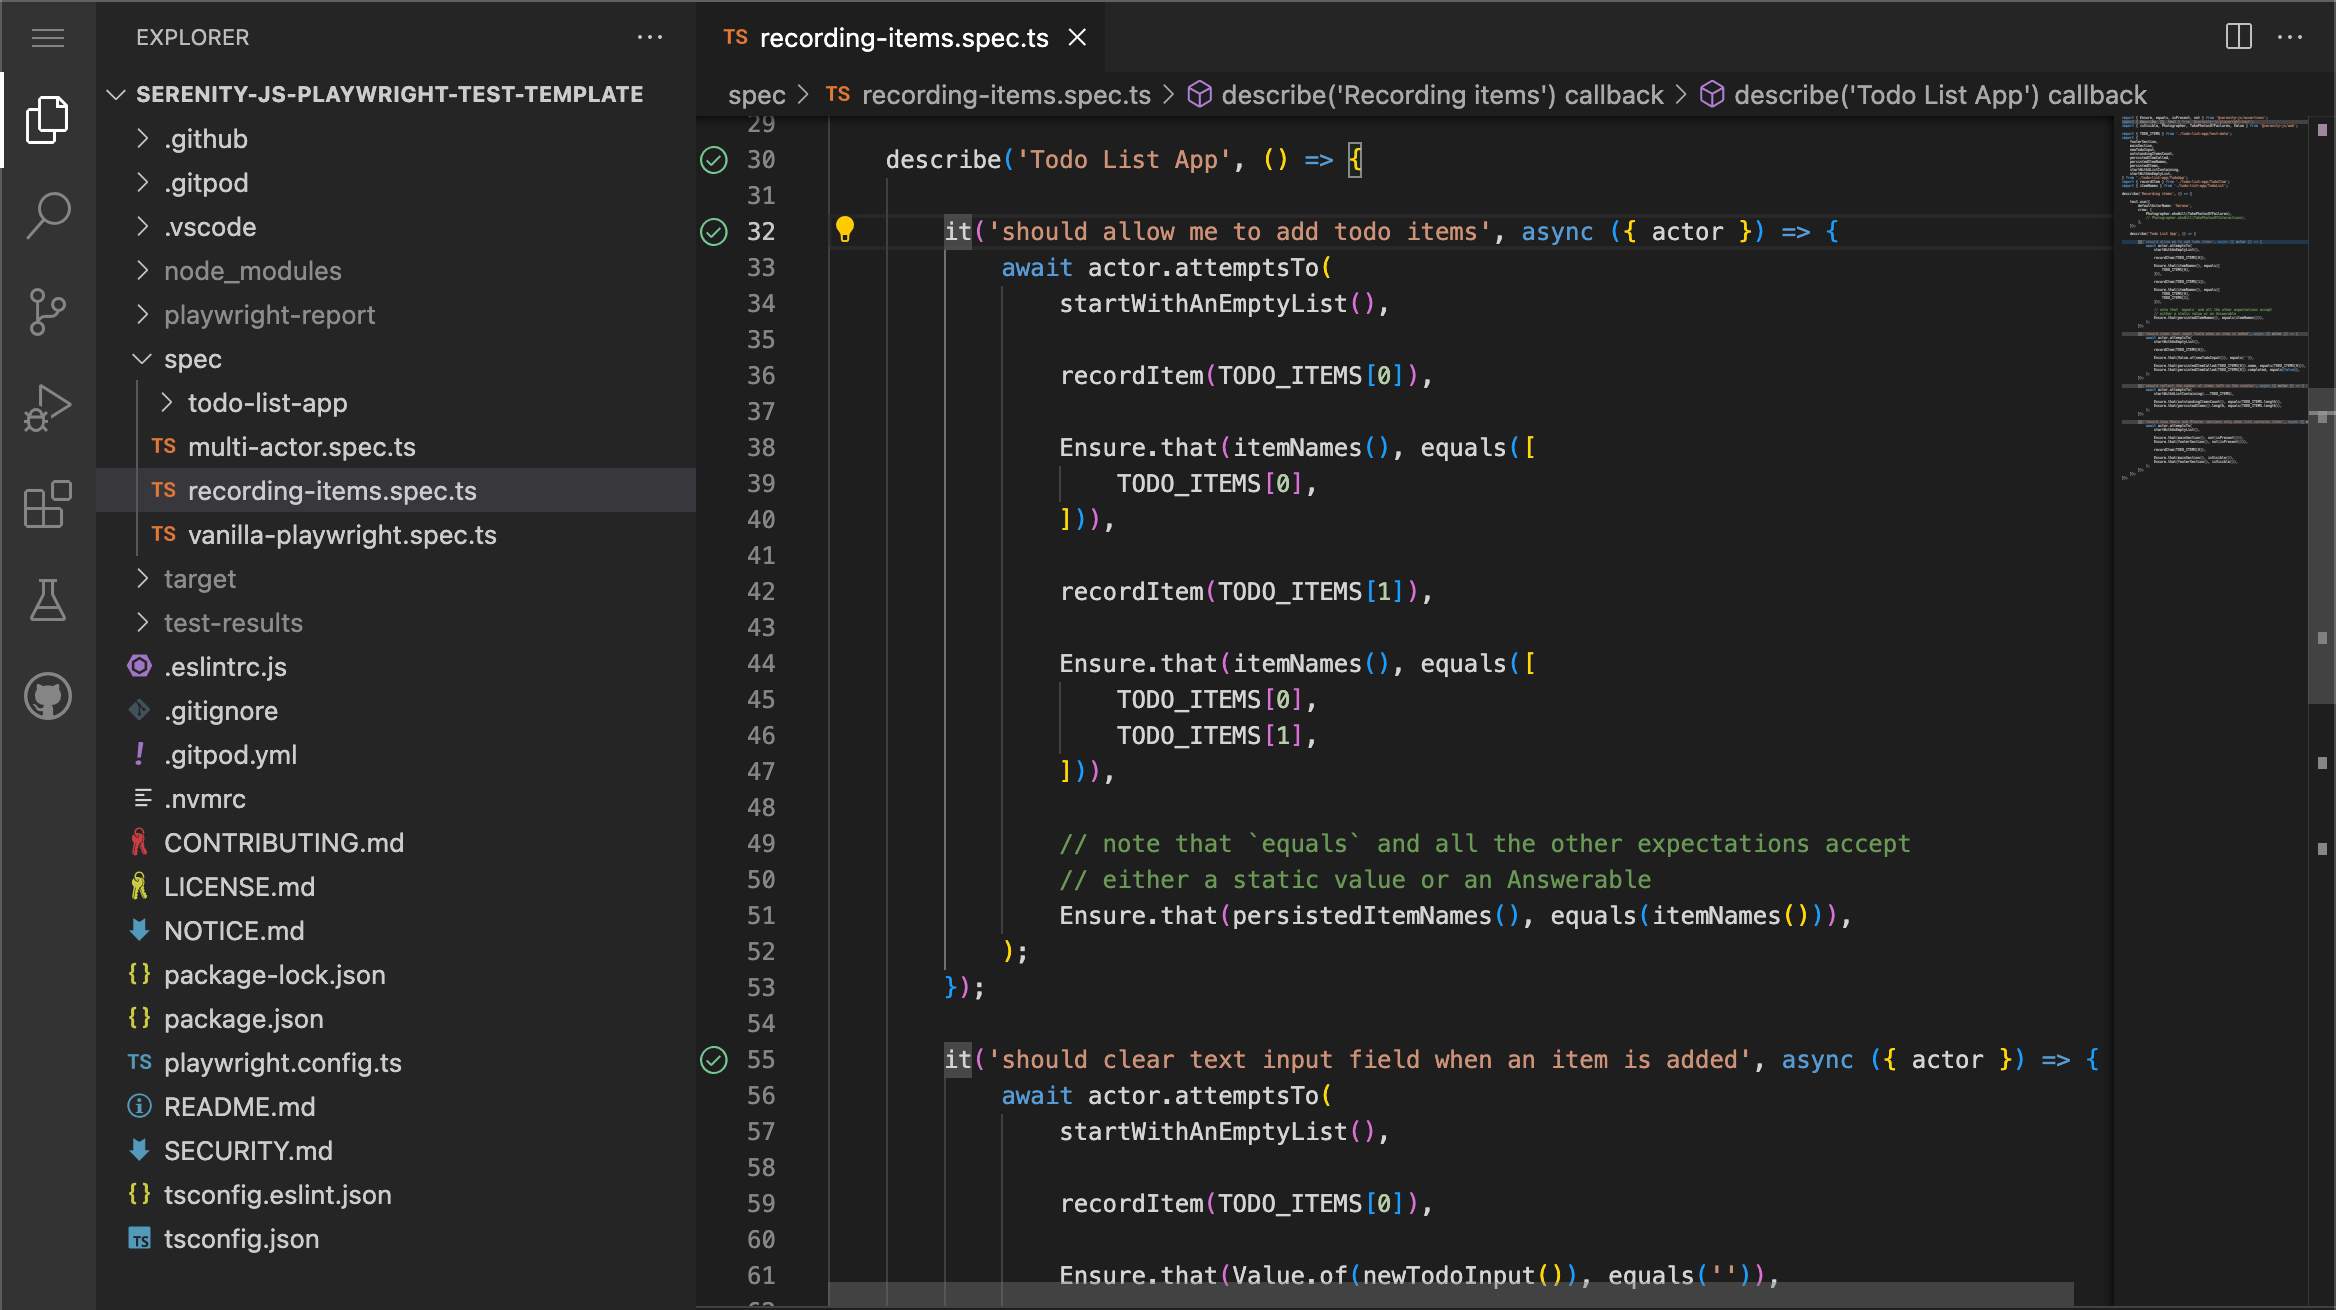 Visual Studio Code user interface showing an example test scenario